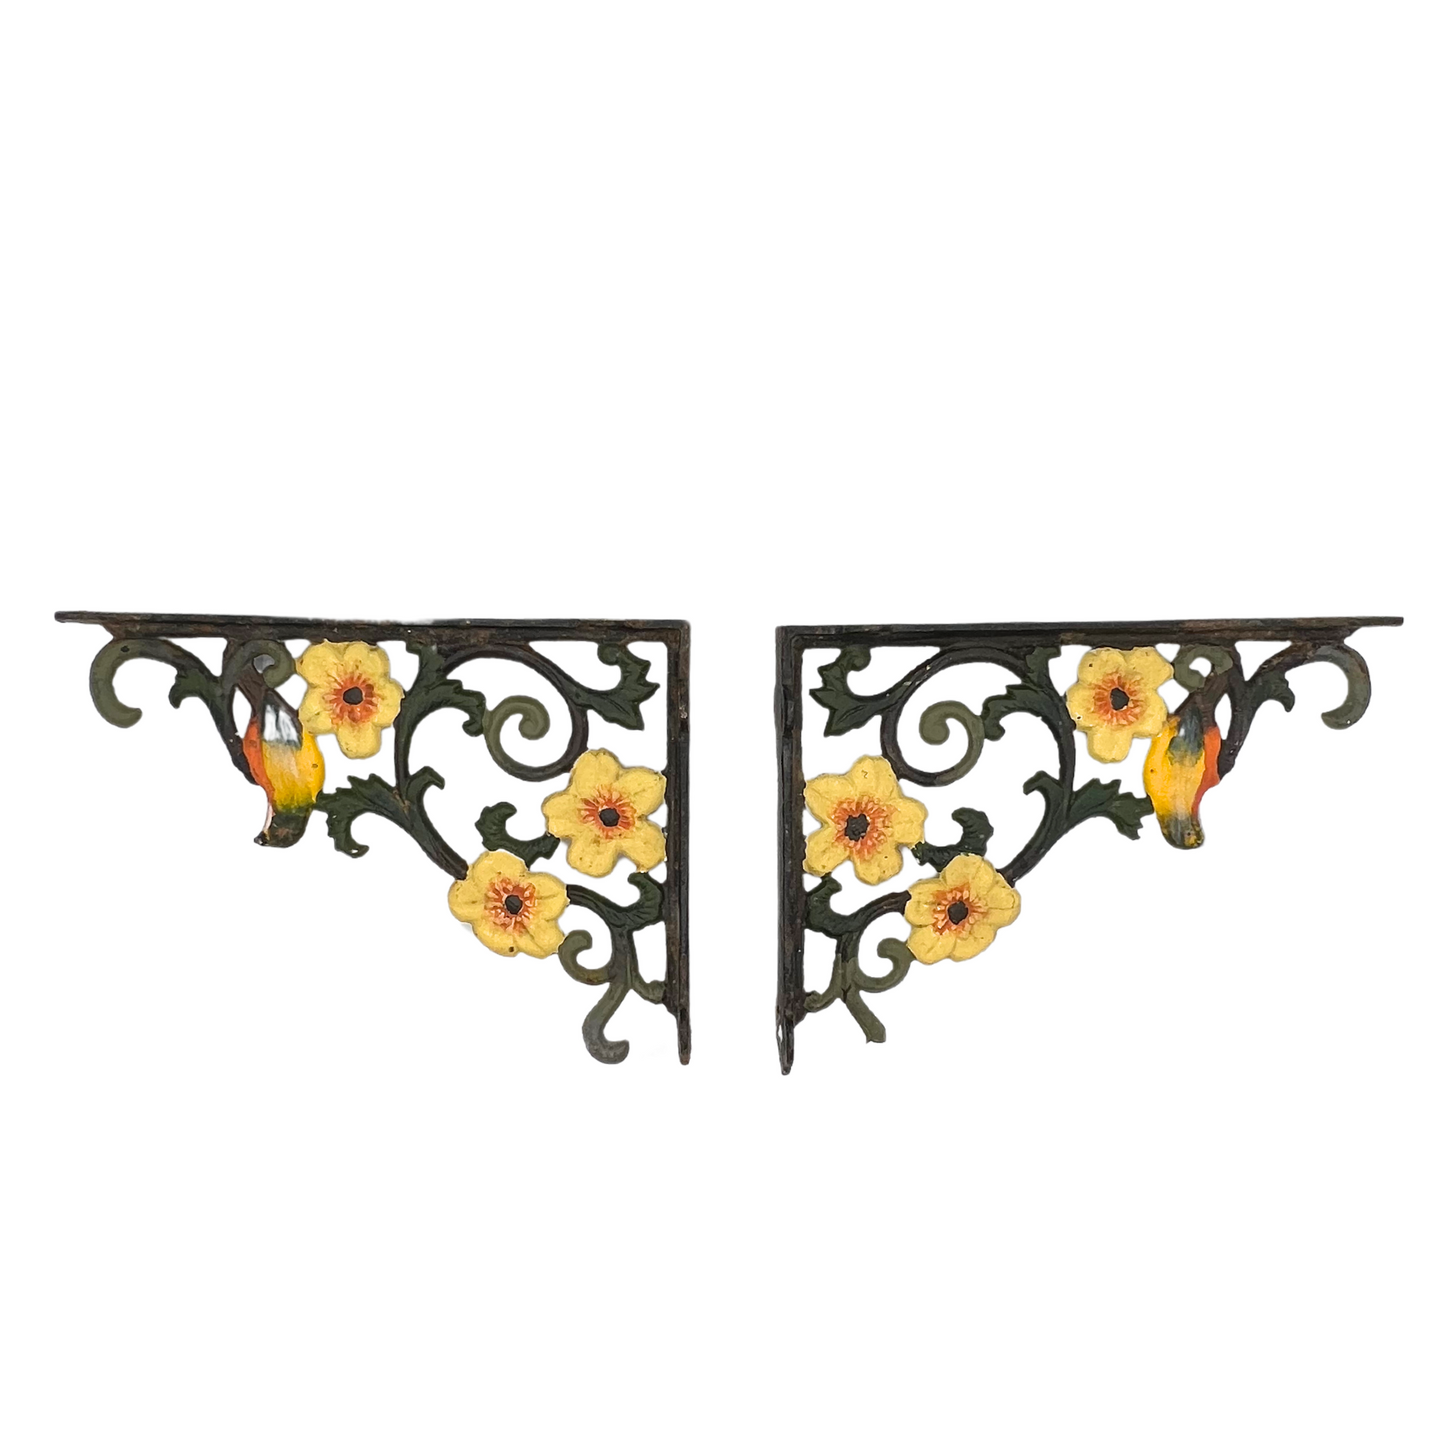 pair of vintage floral cast iron shelf brackets